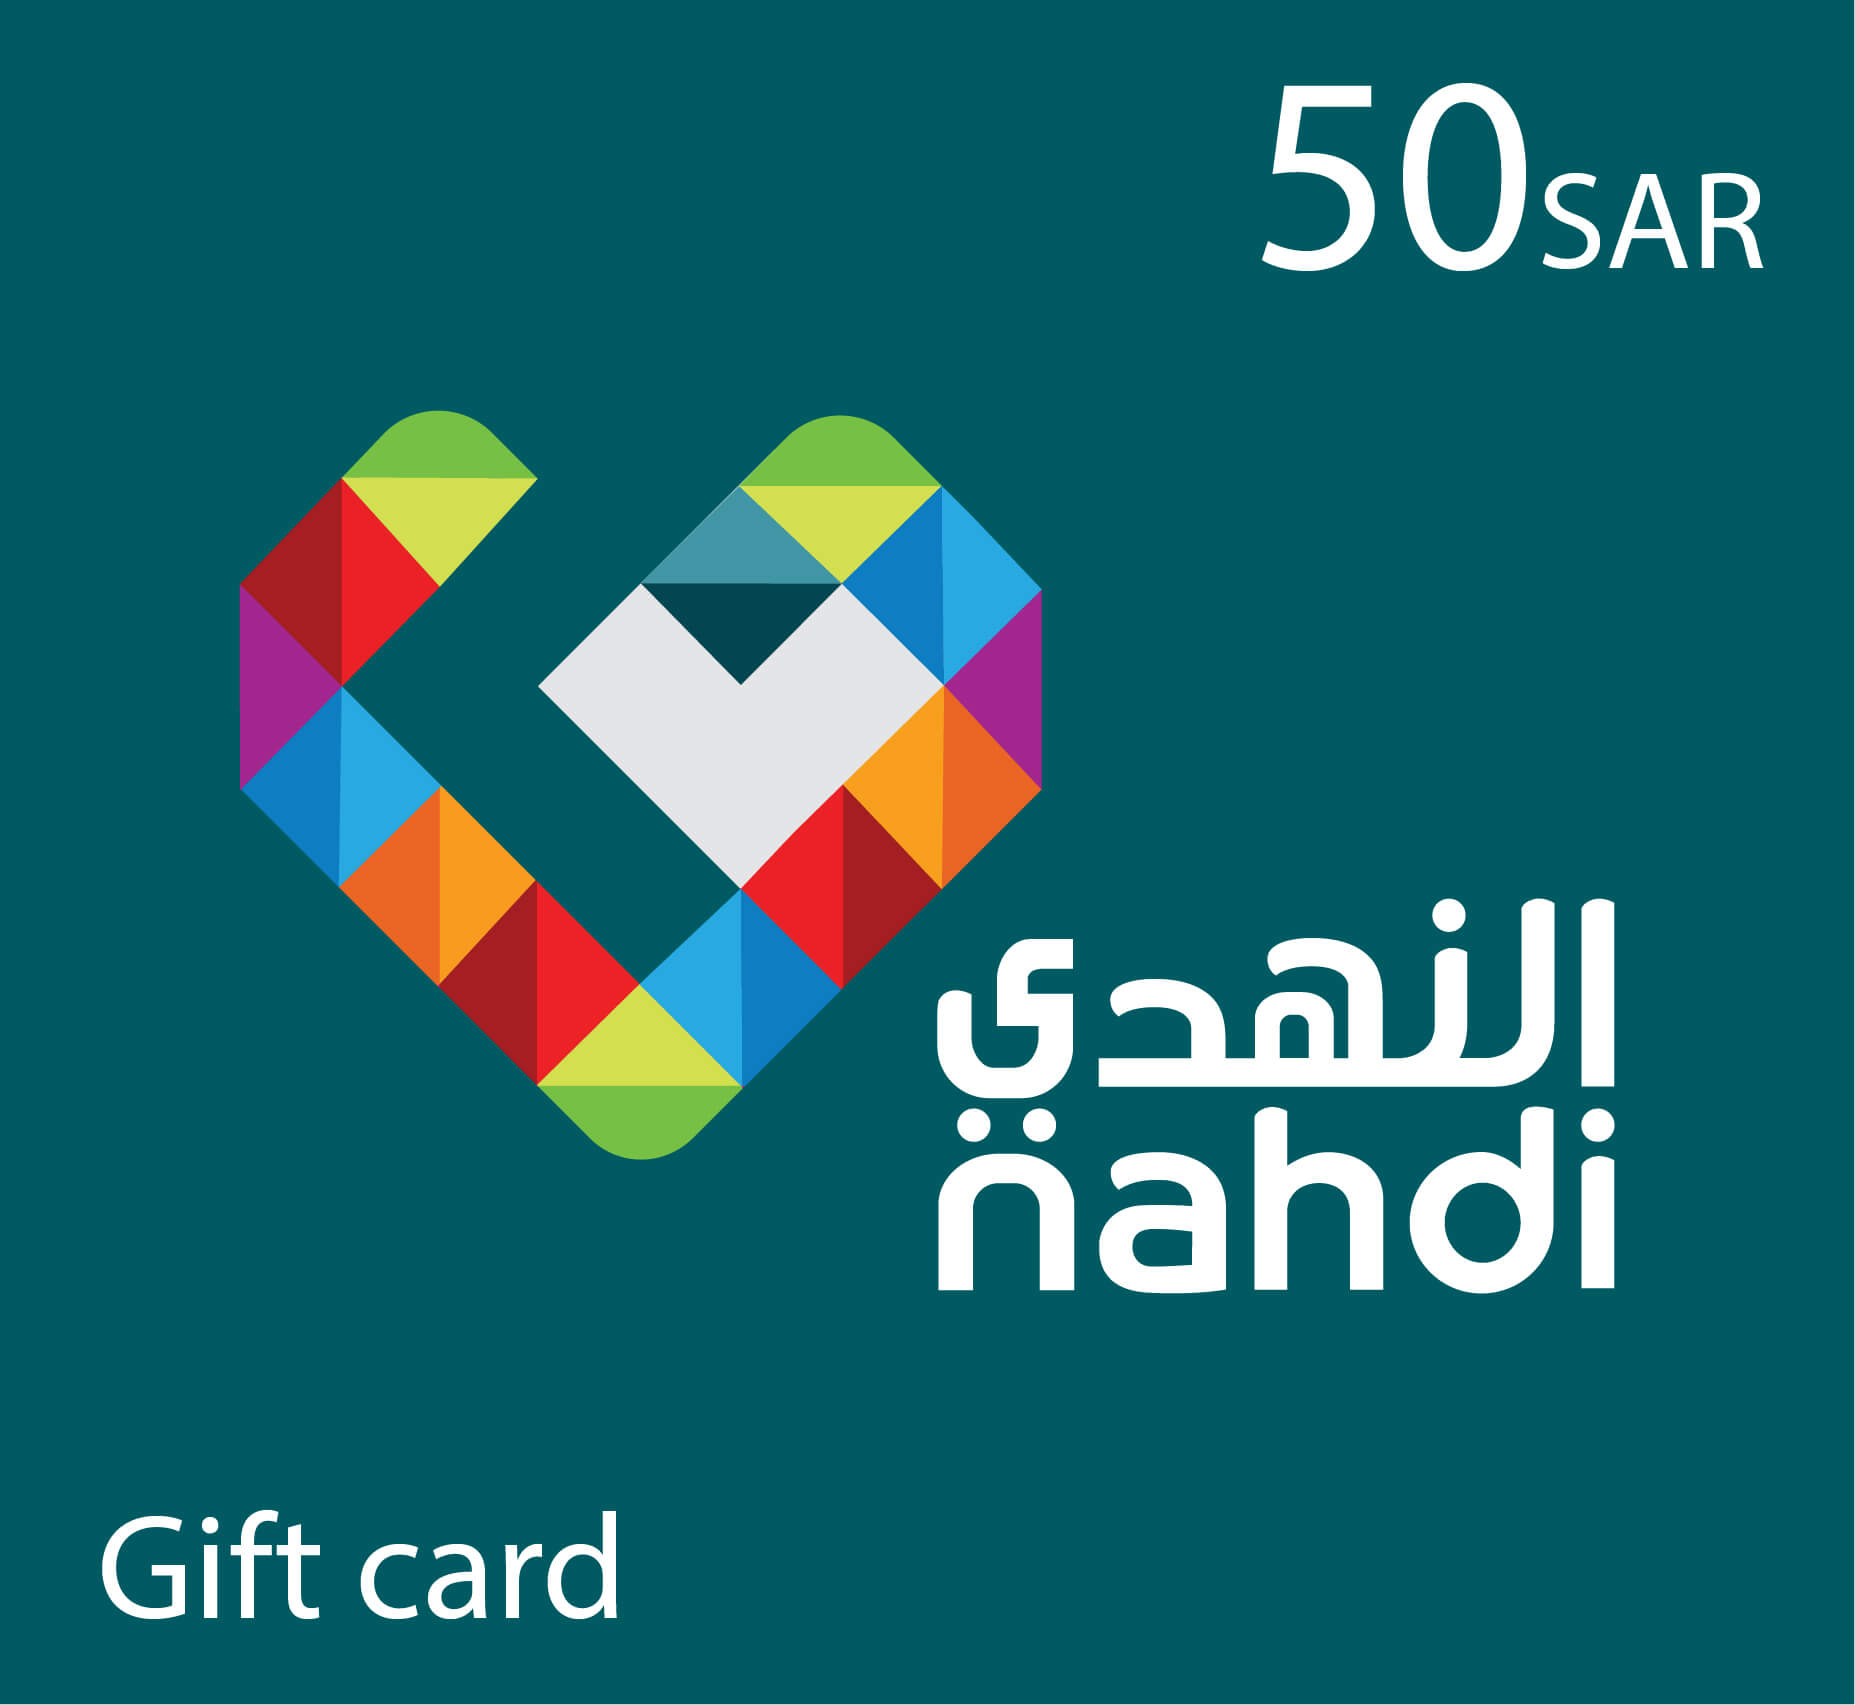 Nahdi Pharmacy Gift Card - 50 SAR